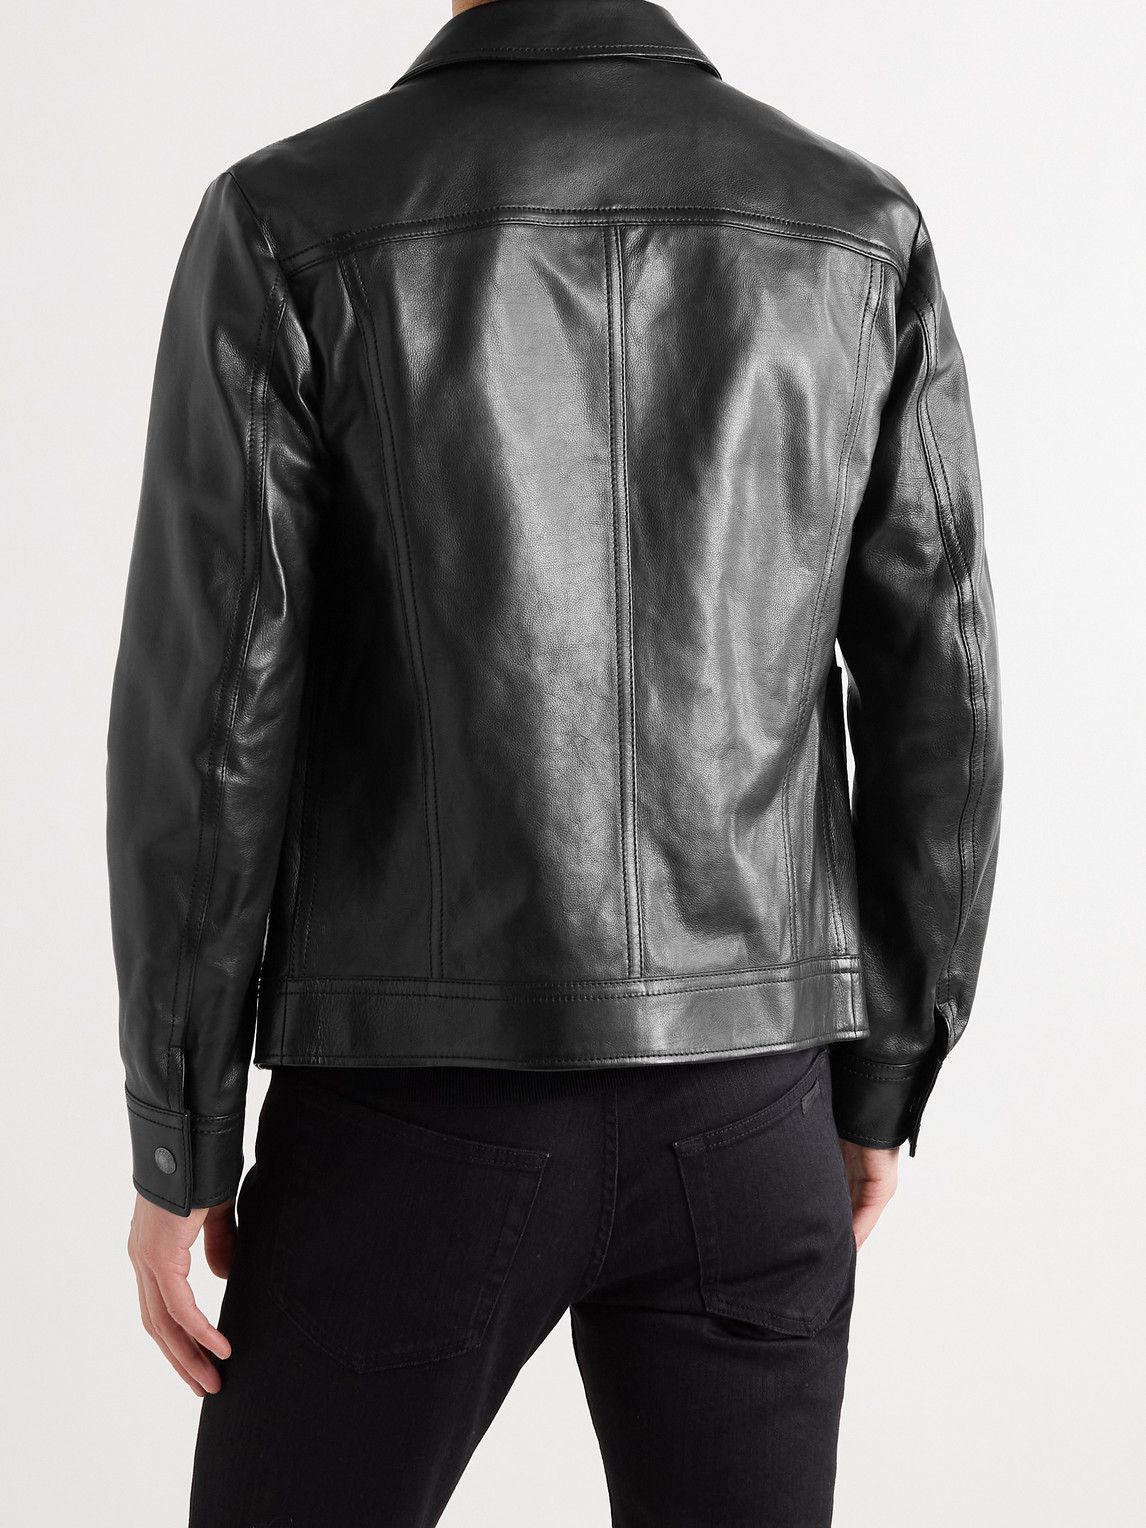 TOM FORD - Leather Blouson Jacket - Black TOM FORD